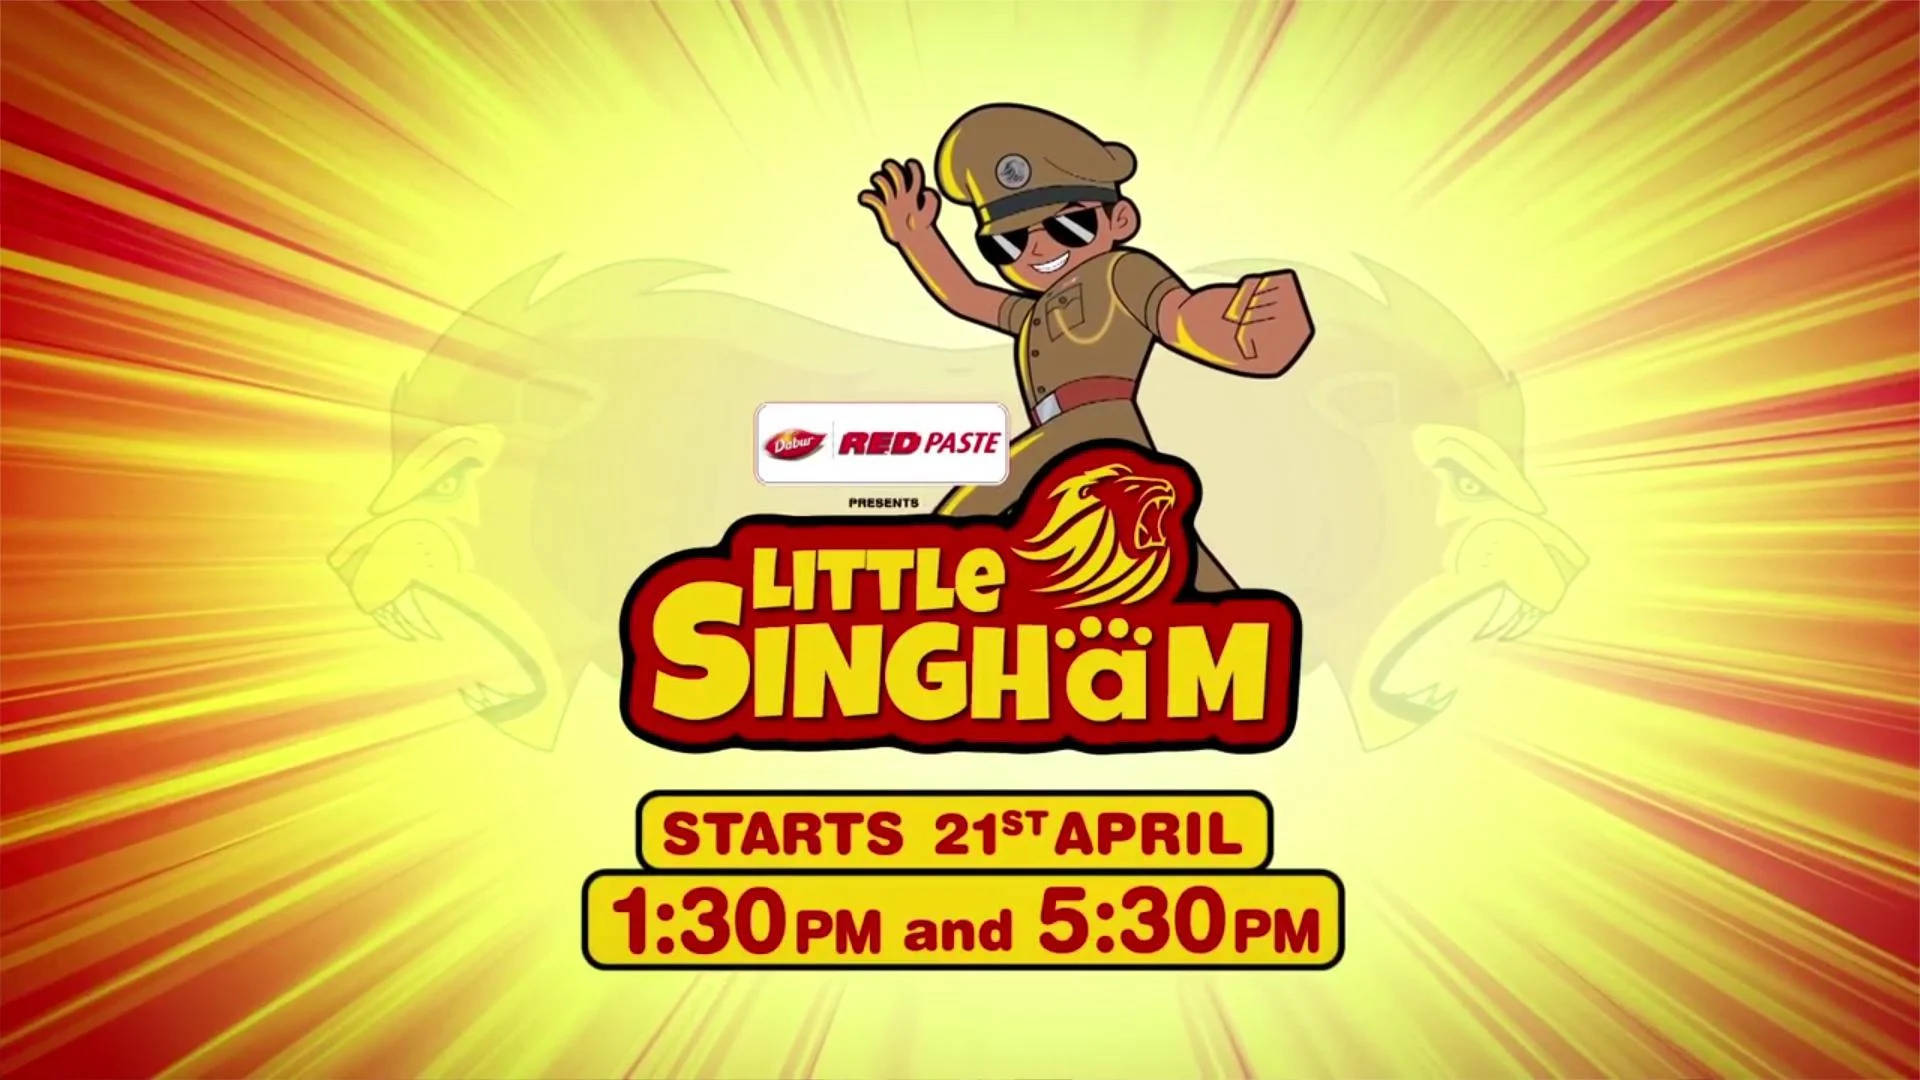 Little Singham Show Schedule